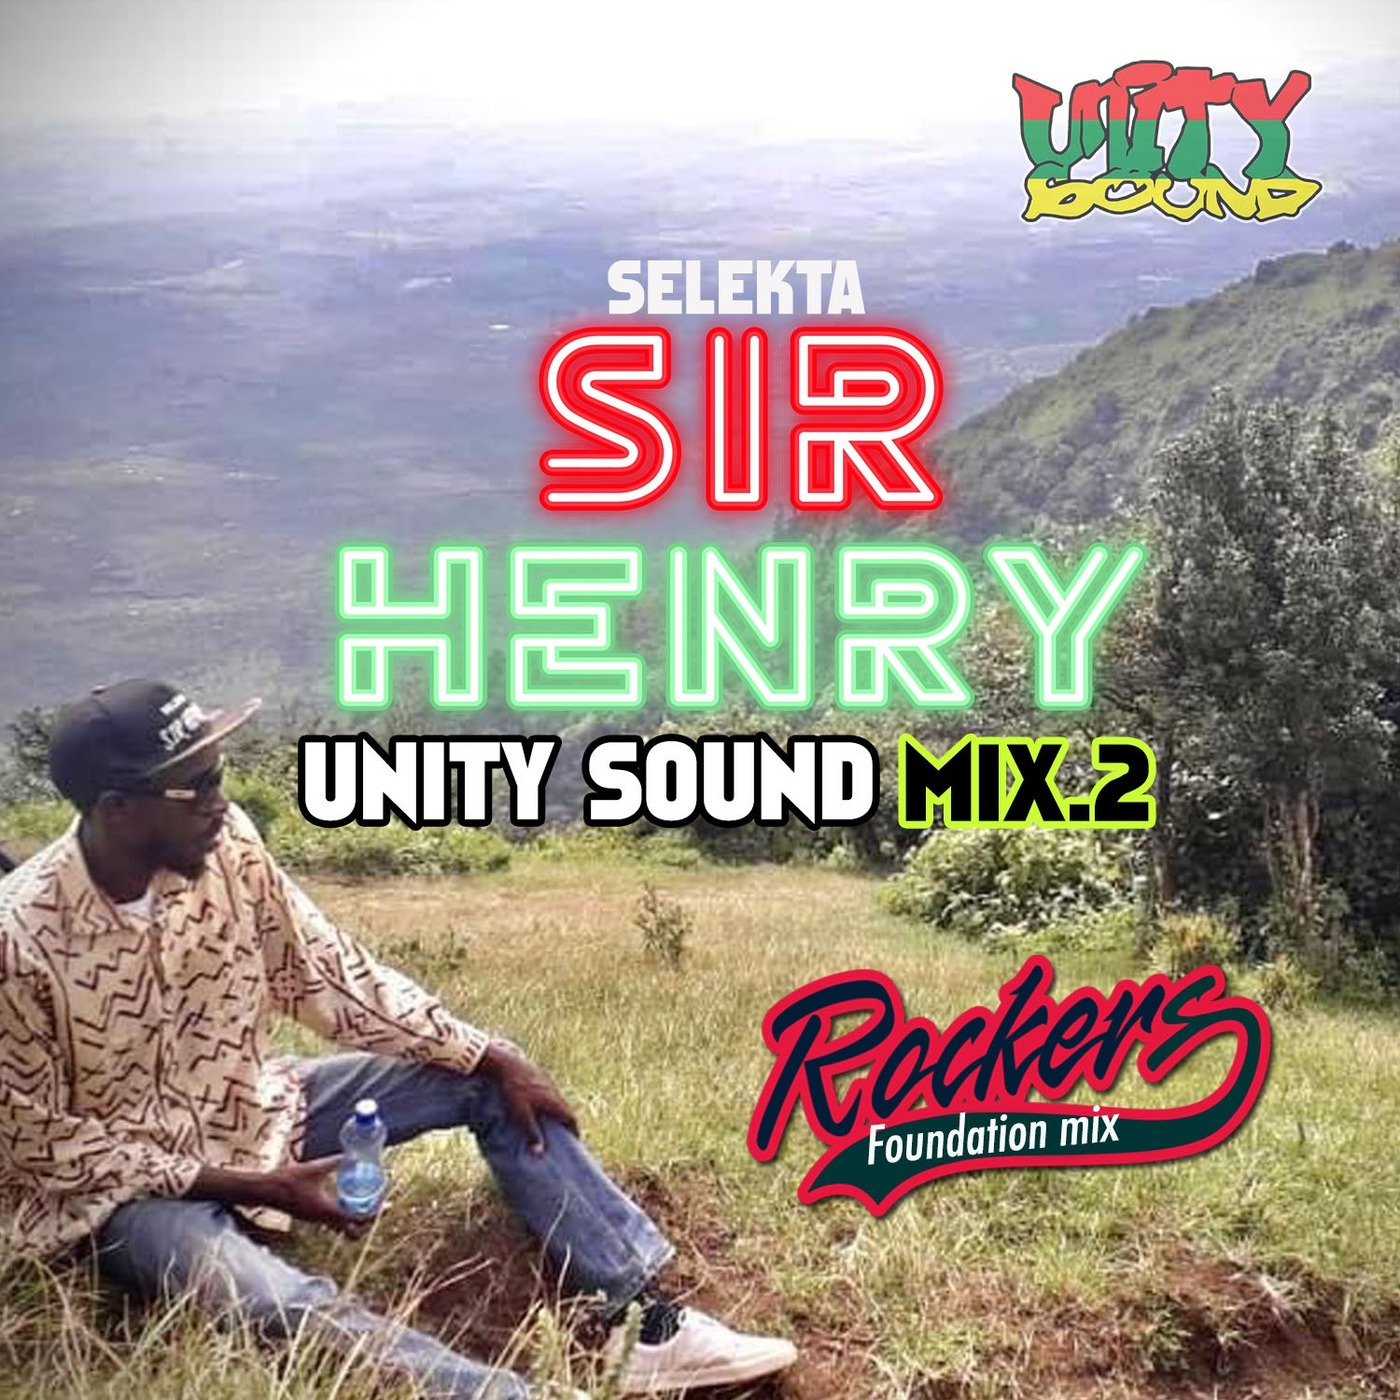 Selekta Sir Henry from Unity Sound - Rockers Foundation Mix